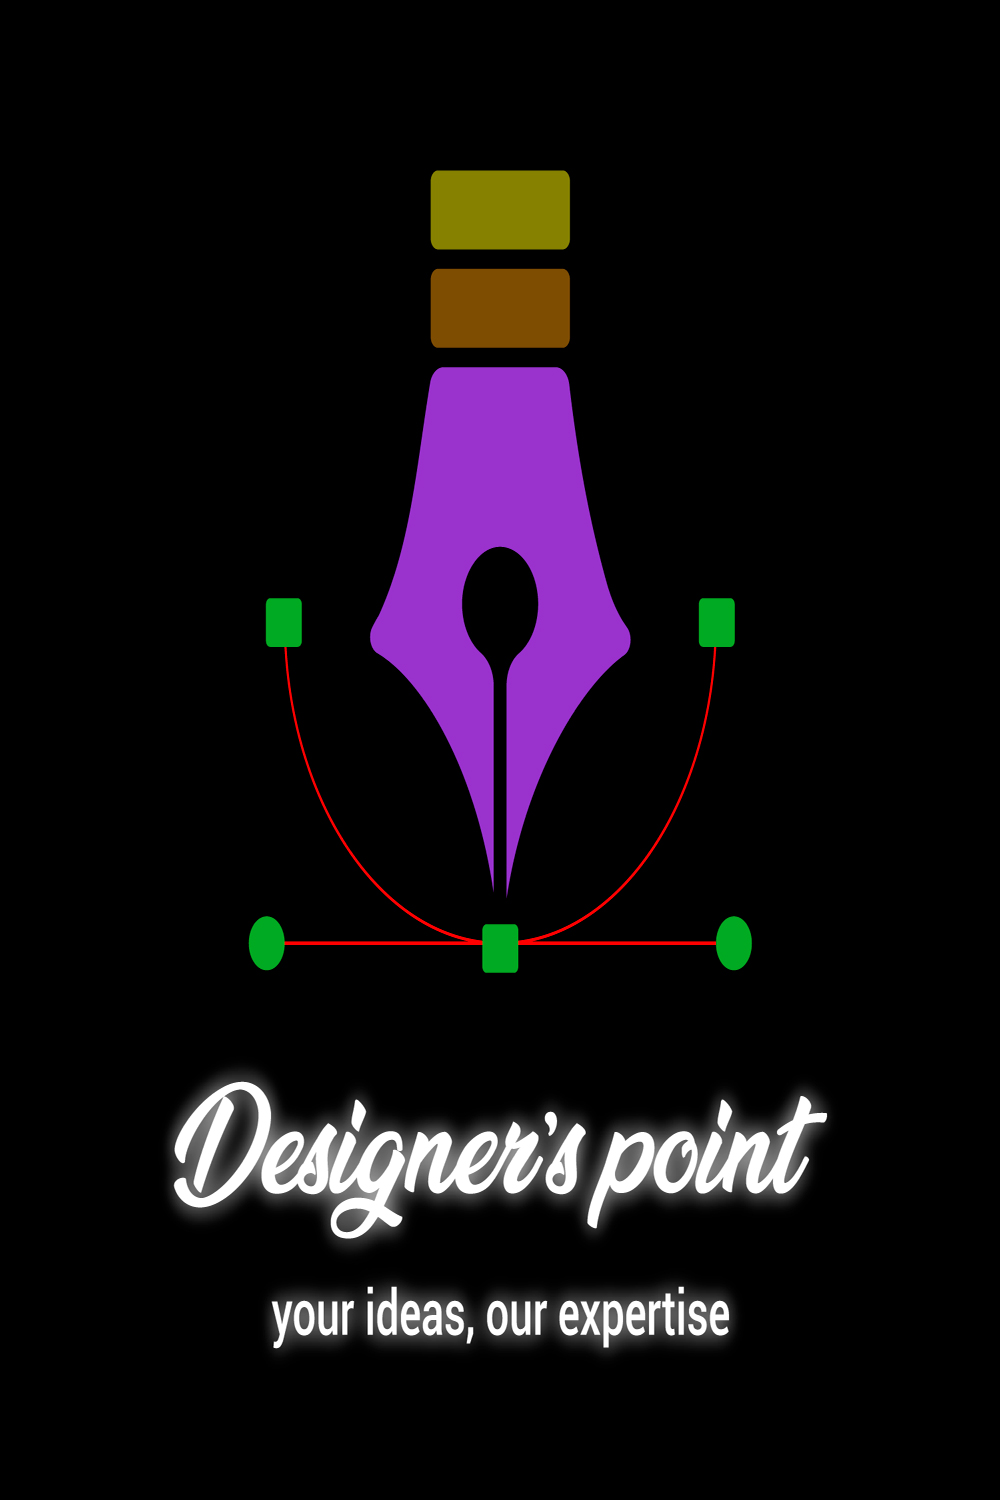 Pen shaped logo pinterest preview image.